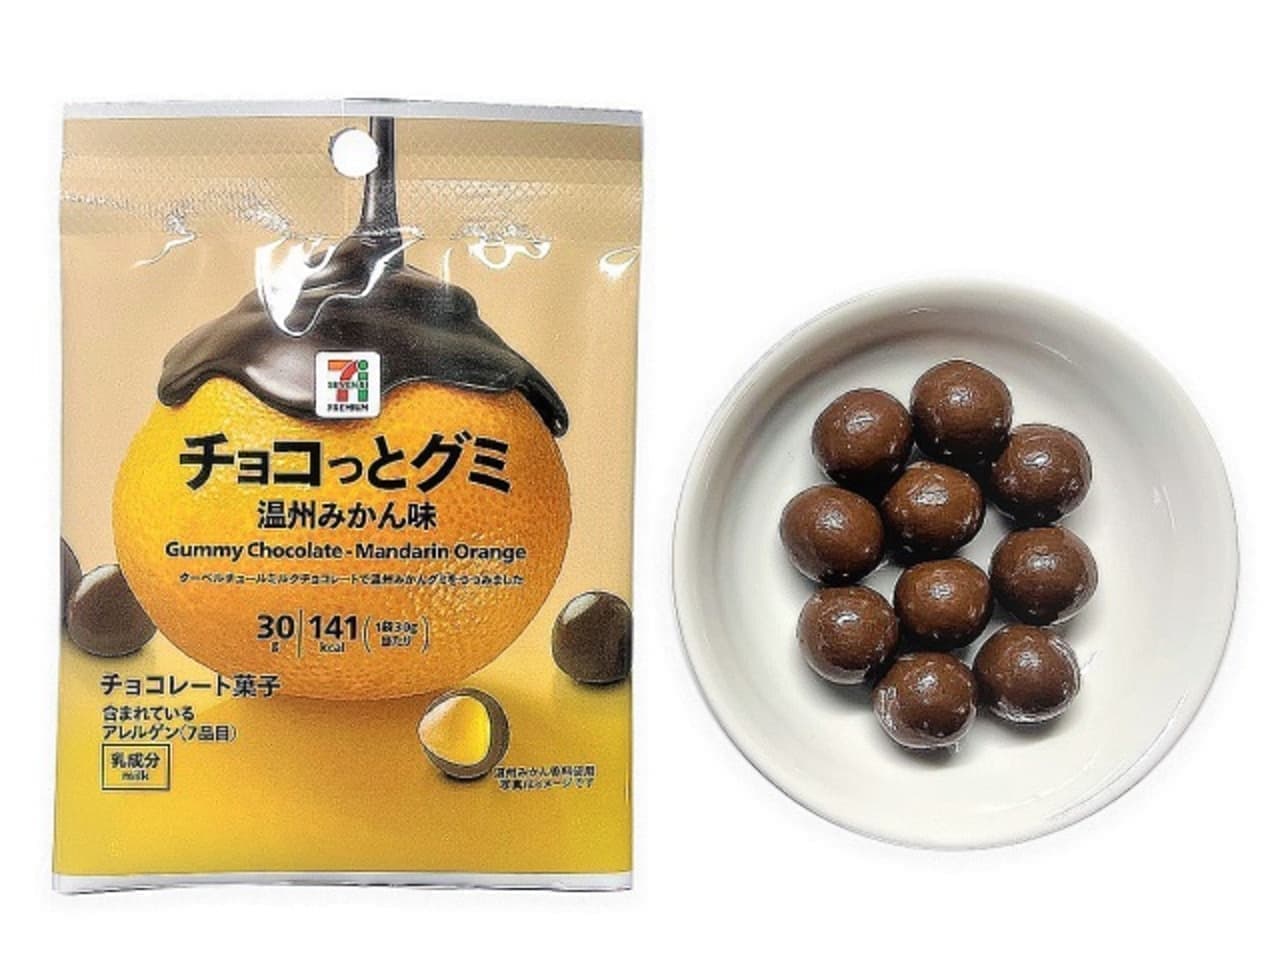 7-Eleven "7 Premium Chocotte Gummi Unshu Mikan Flavor